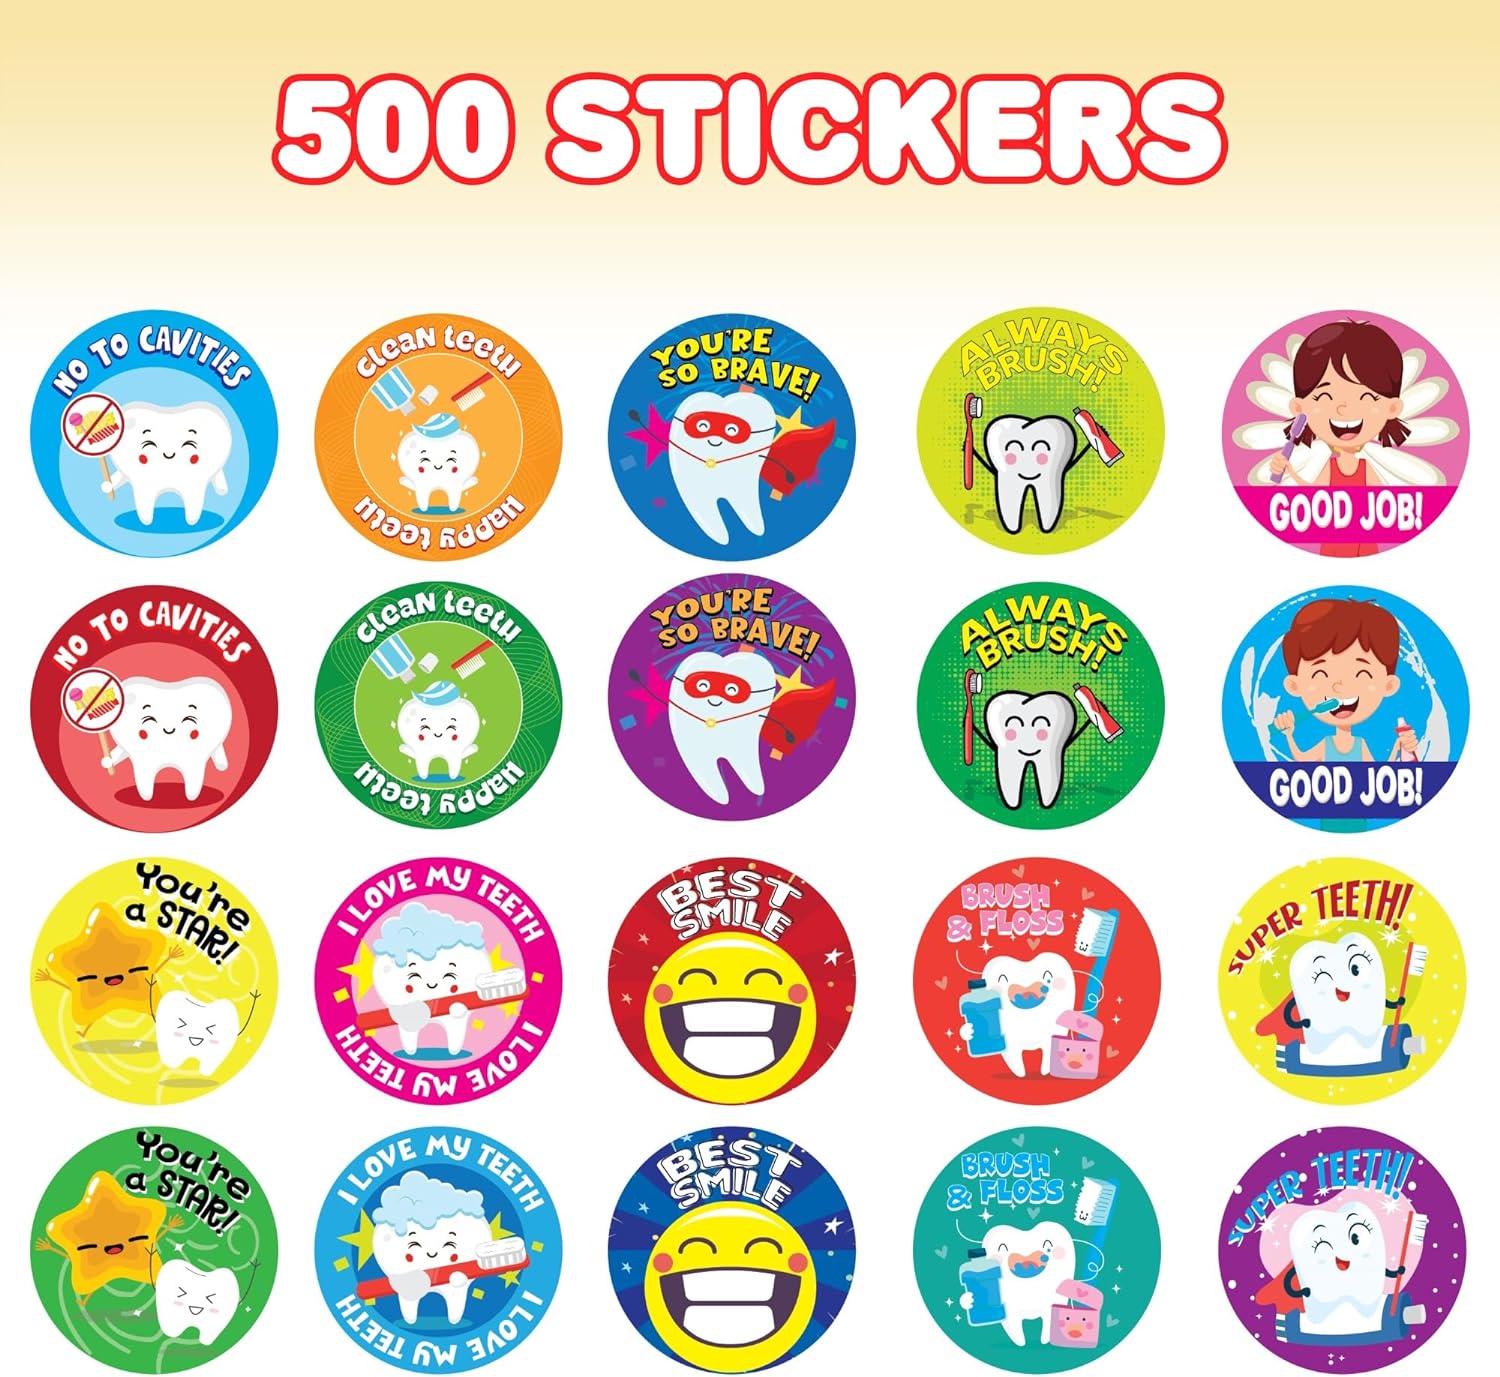 ArtCreativity Dental Sticker Rolls Assortment - Set Includes 500 Dental Themed Stickers - Dental Reward, Goodie Bag Fillers, Party Favors - Fun Craft Tool for Children Ages 3+